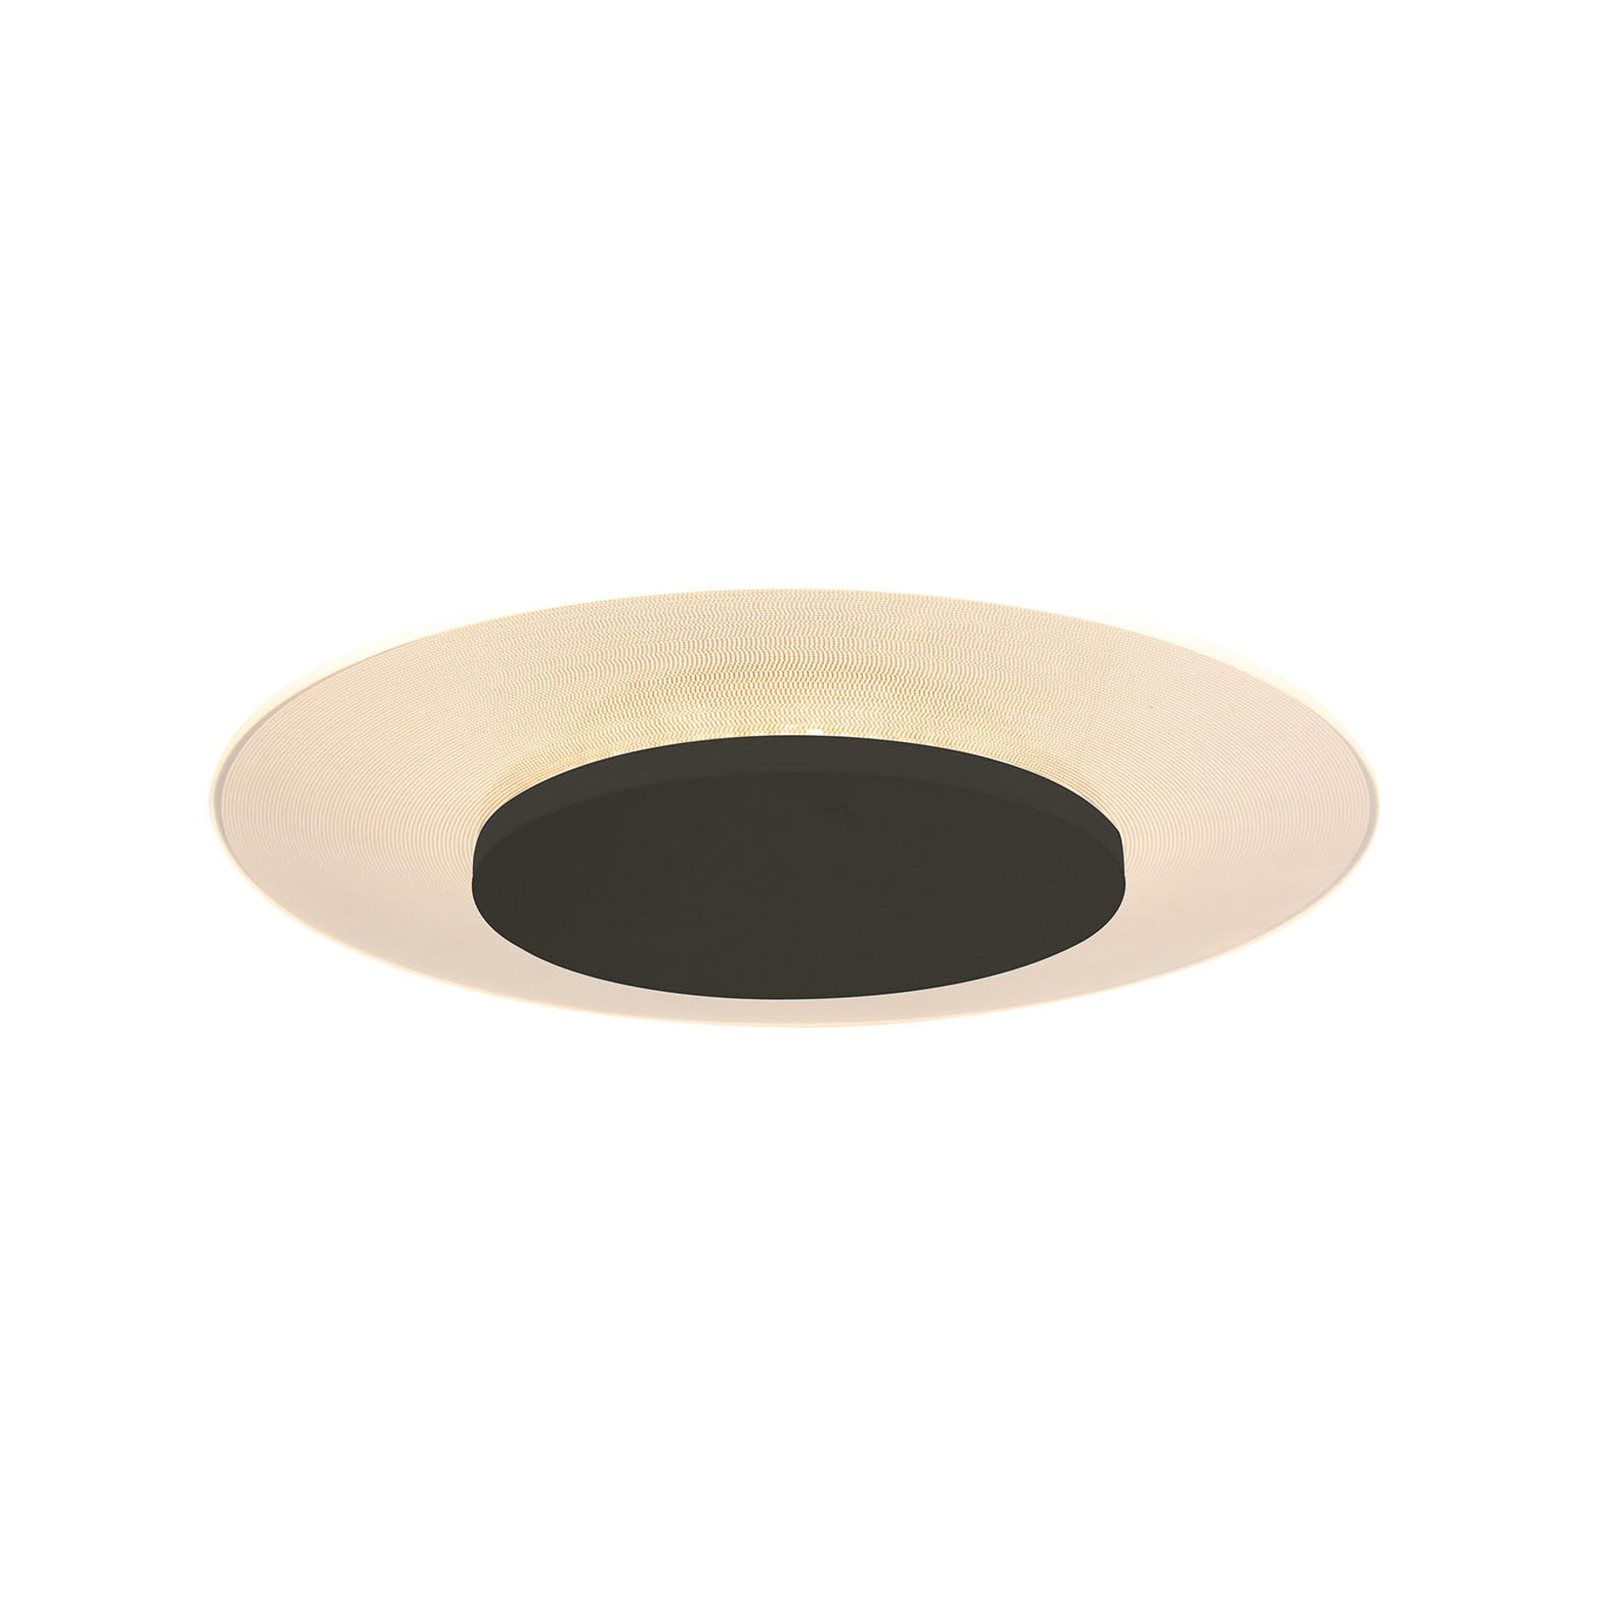 LED plafondlamp Lido, zwart, Ø 42cm